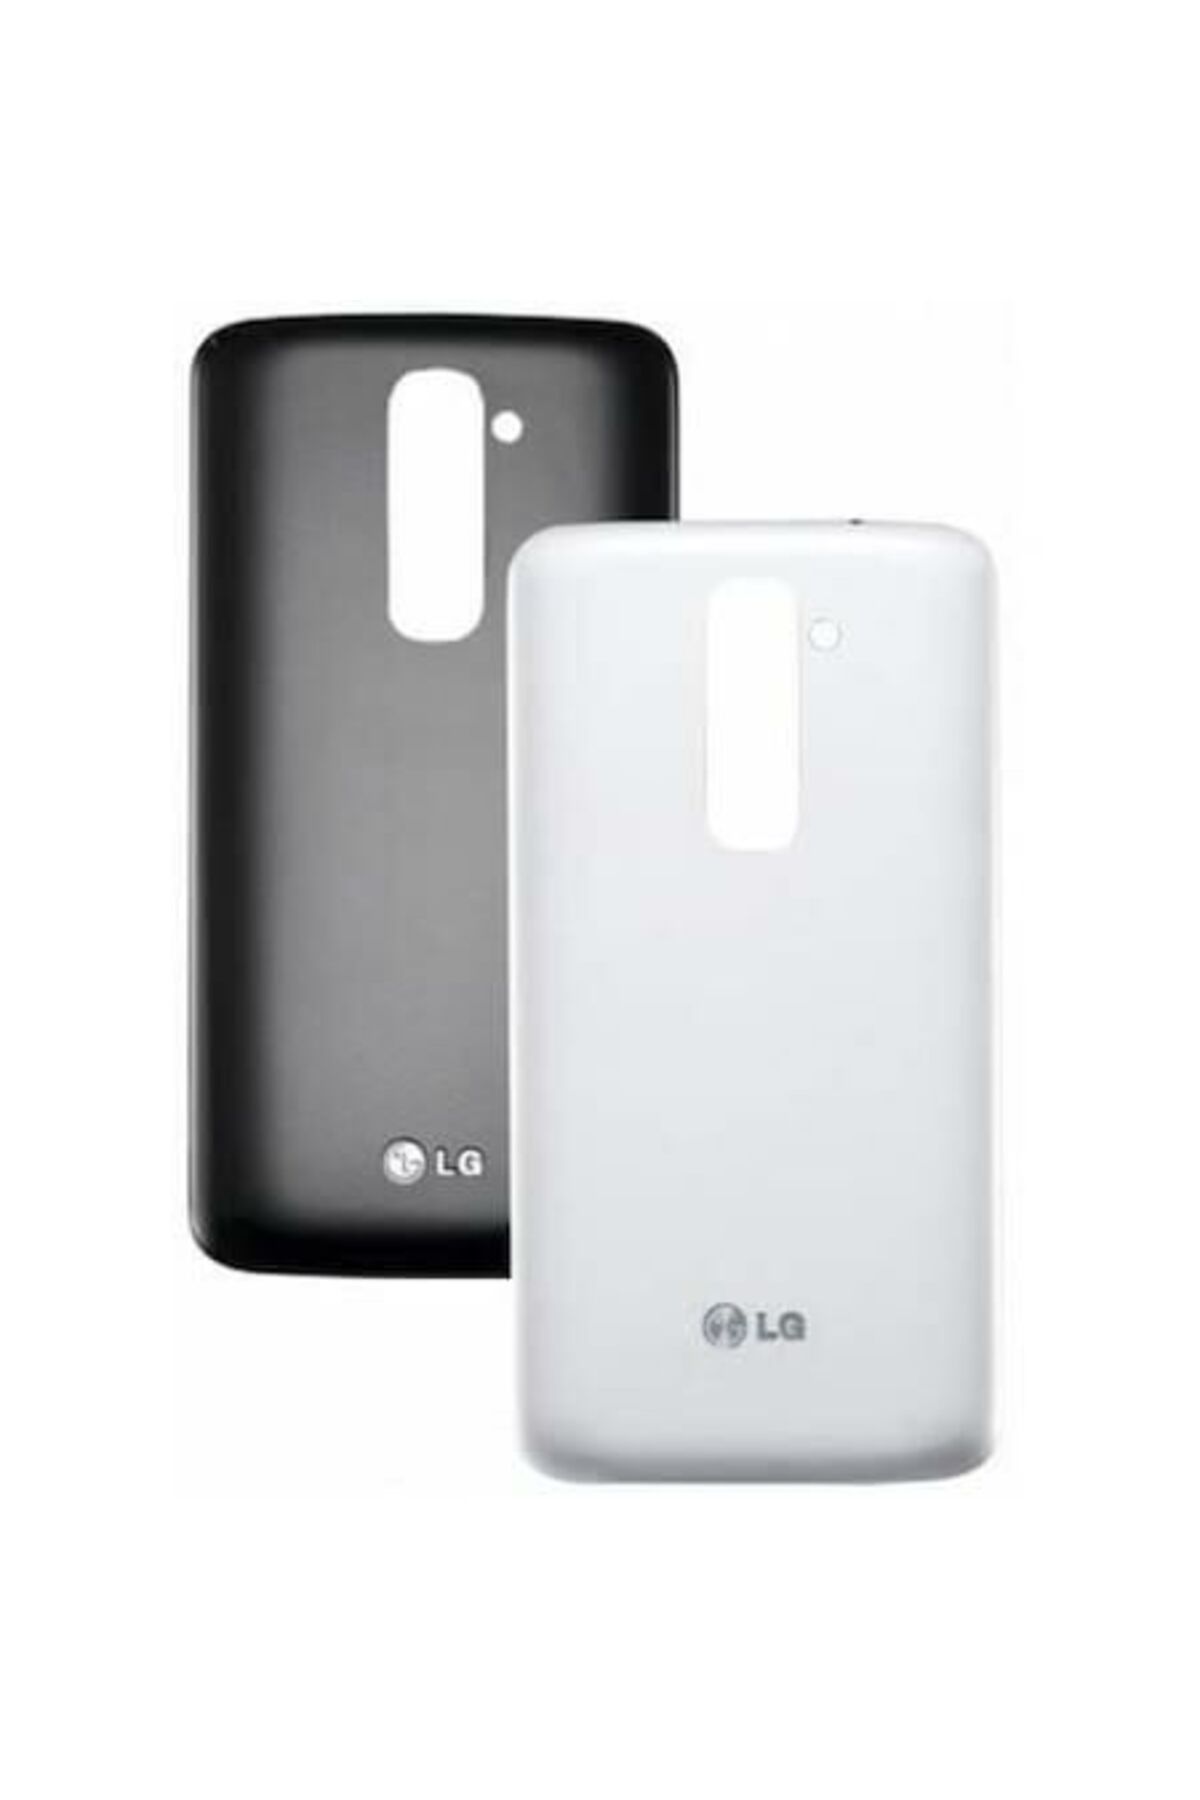 OEM TELEFON KAPAK LG G2 - G3 - G3 MİNİ - G4 - G4 MİNİ